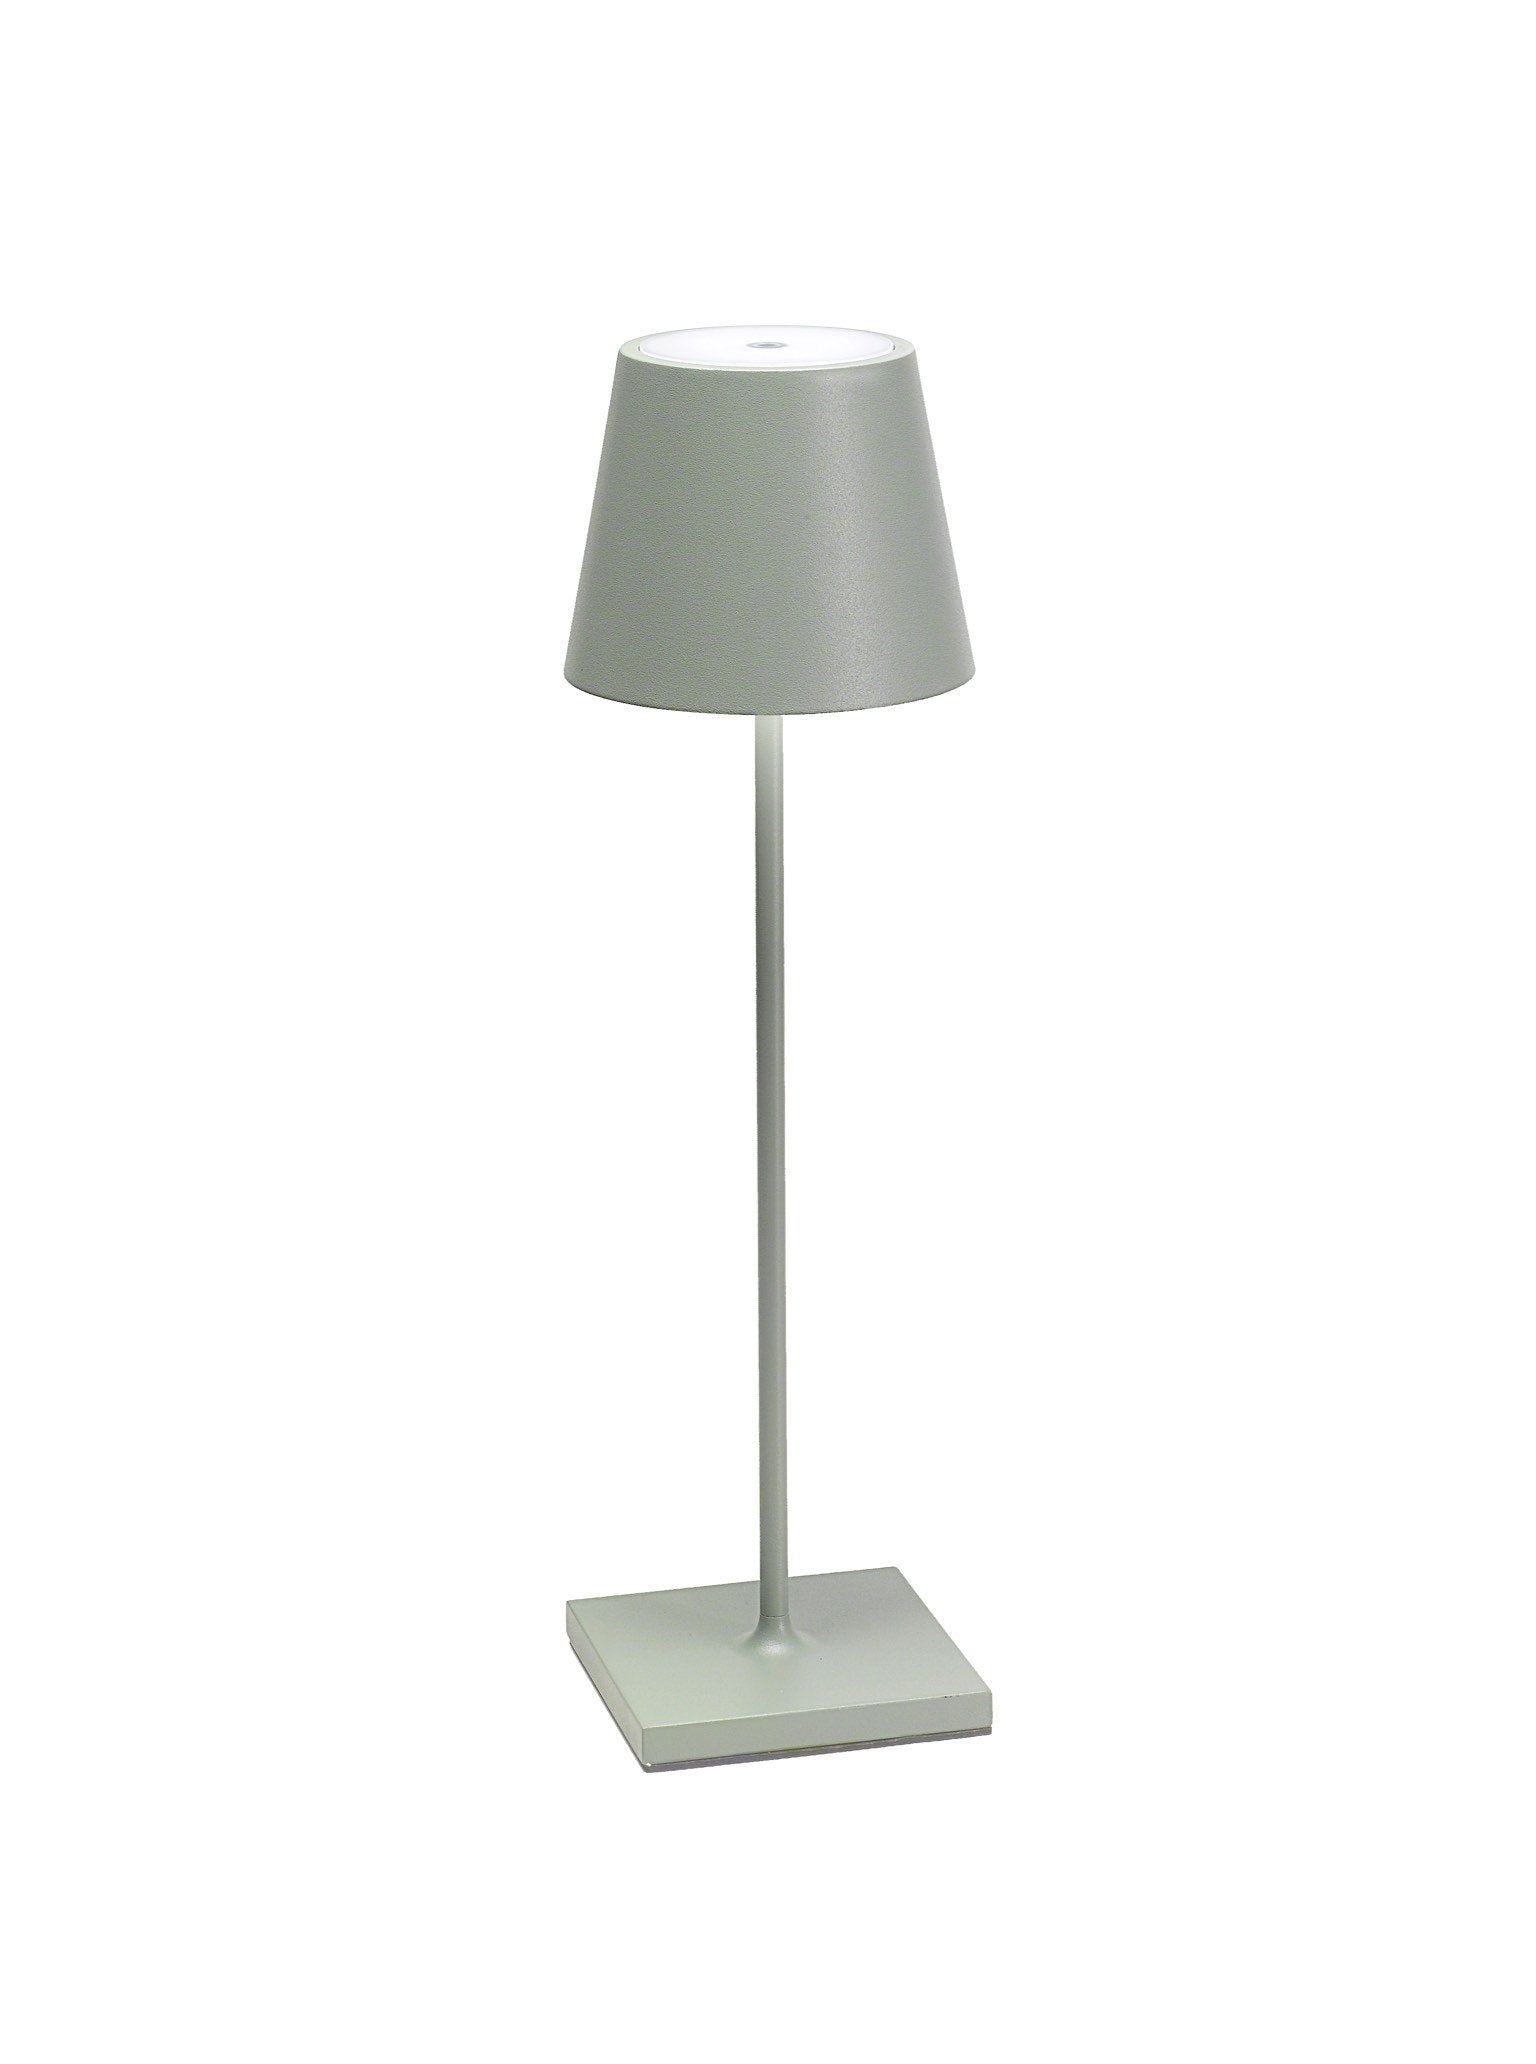 Poldina Pro mini the original rechargeable table lamp by Zafferano